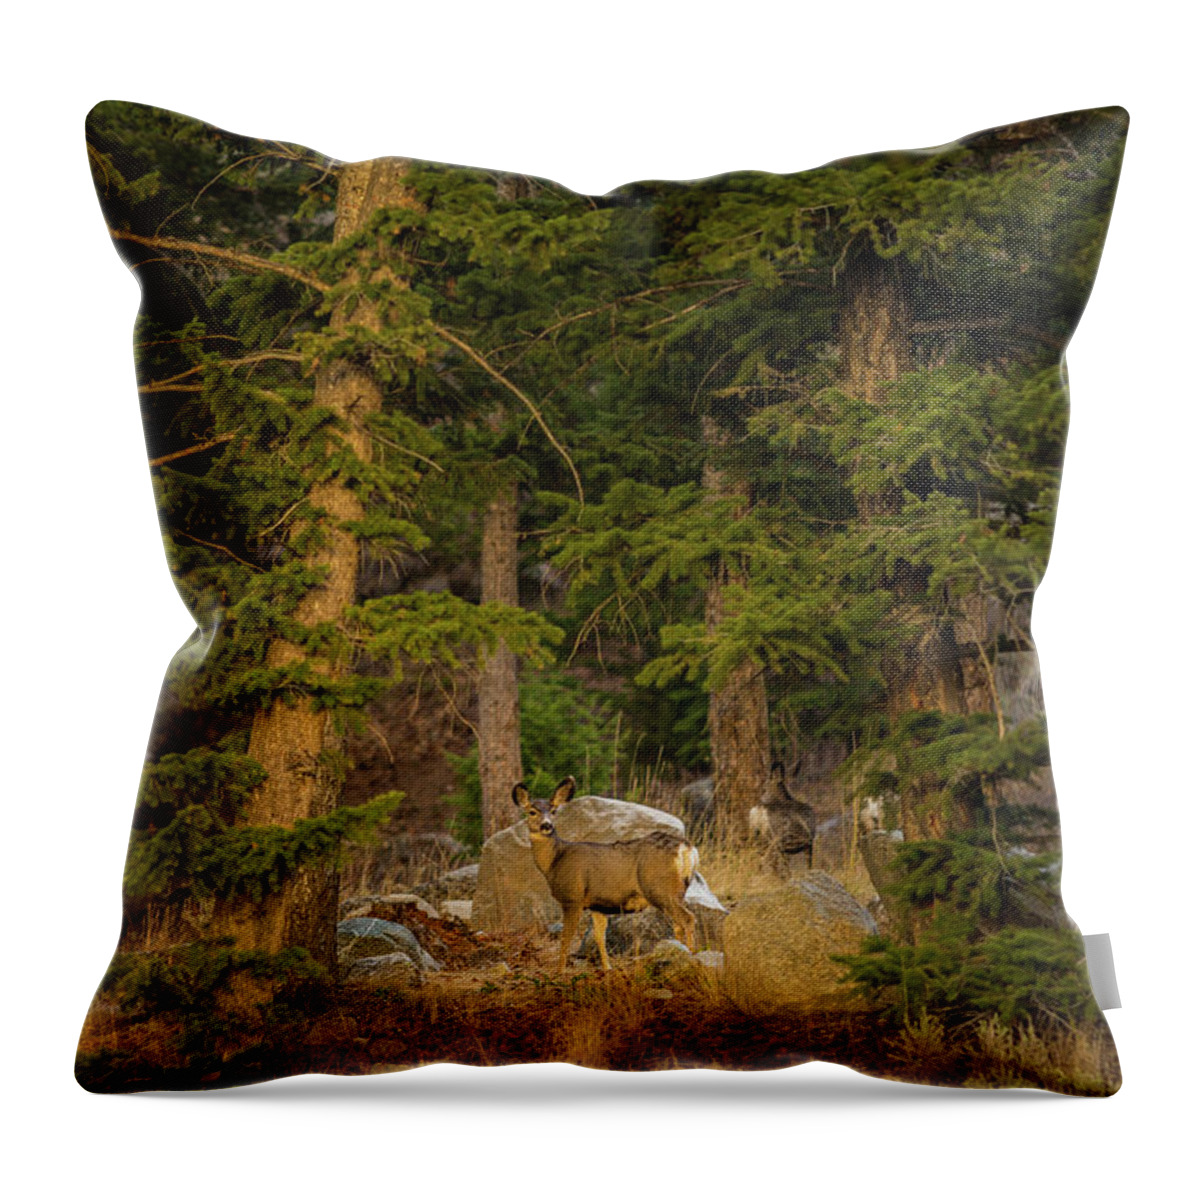 Mule Deer Throw Pillow featuring the photograph Mule deer, Freemont Lake, Wyoming by Julieta Belmont